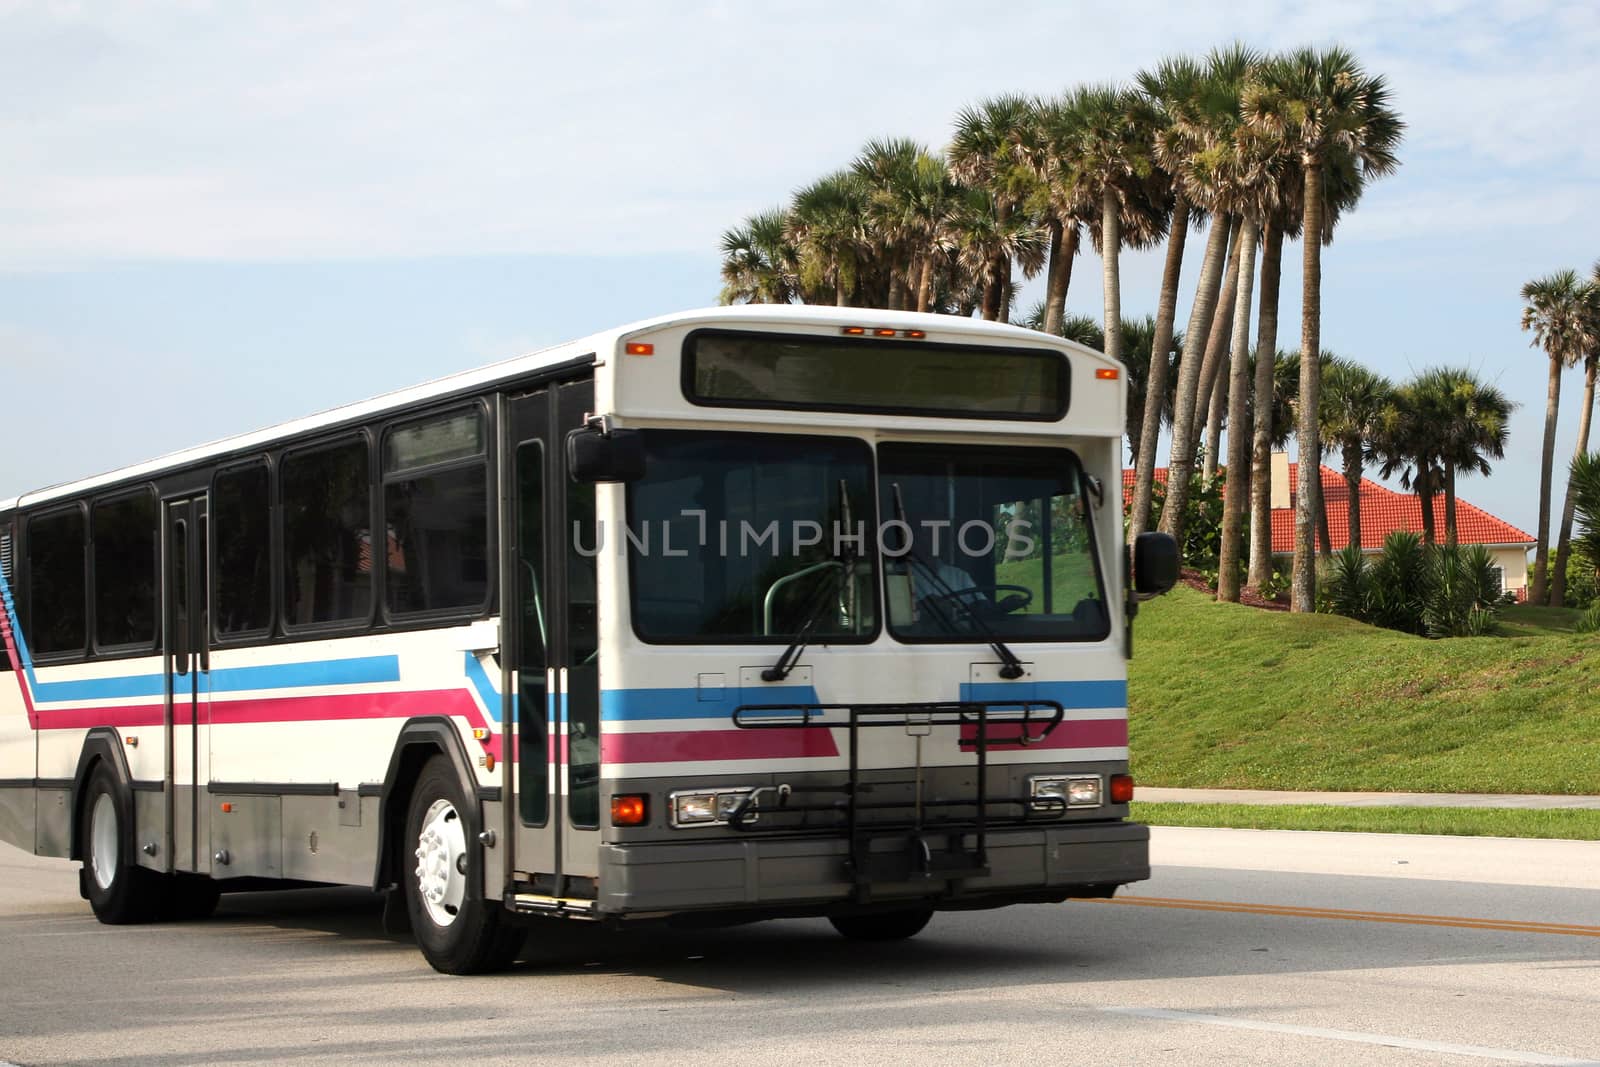 Transit bus by jimmartin